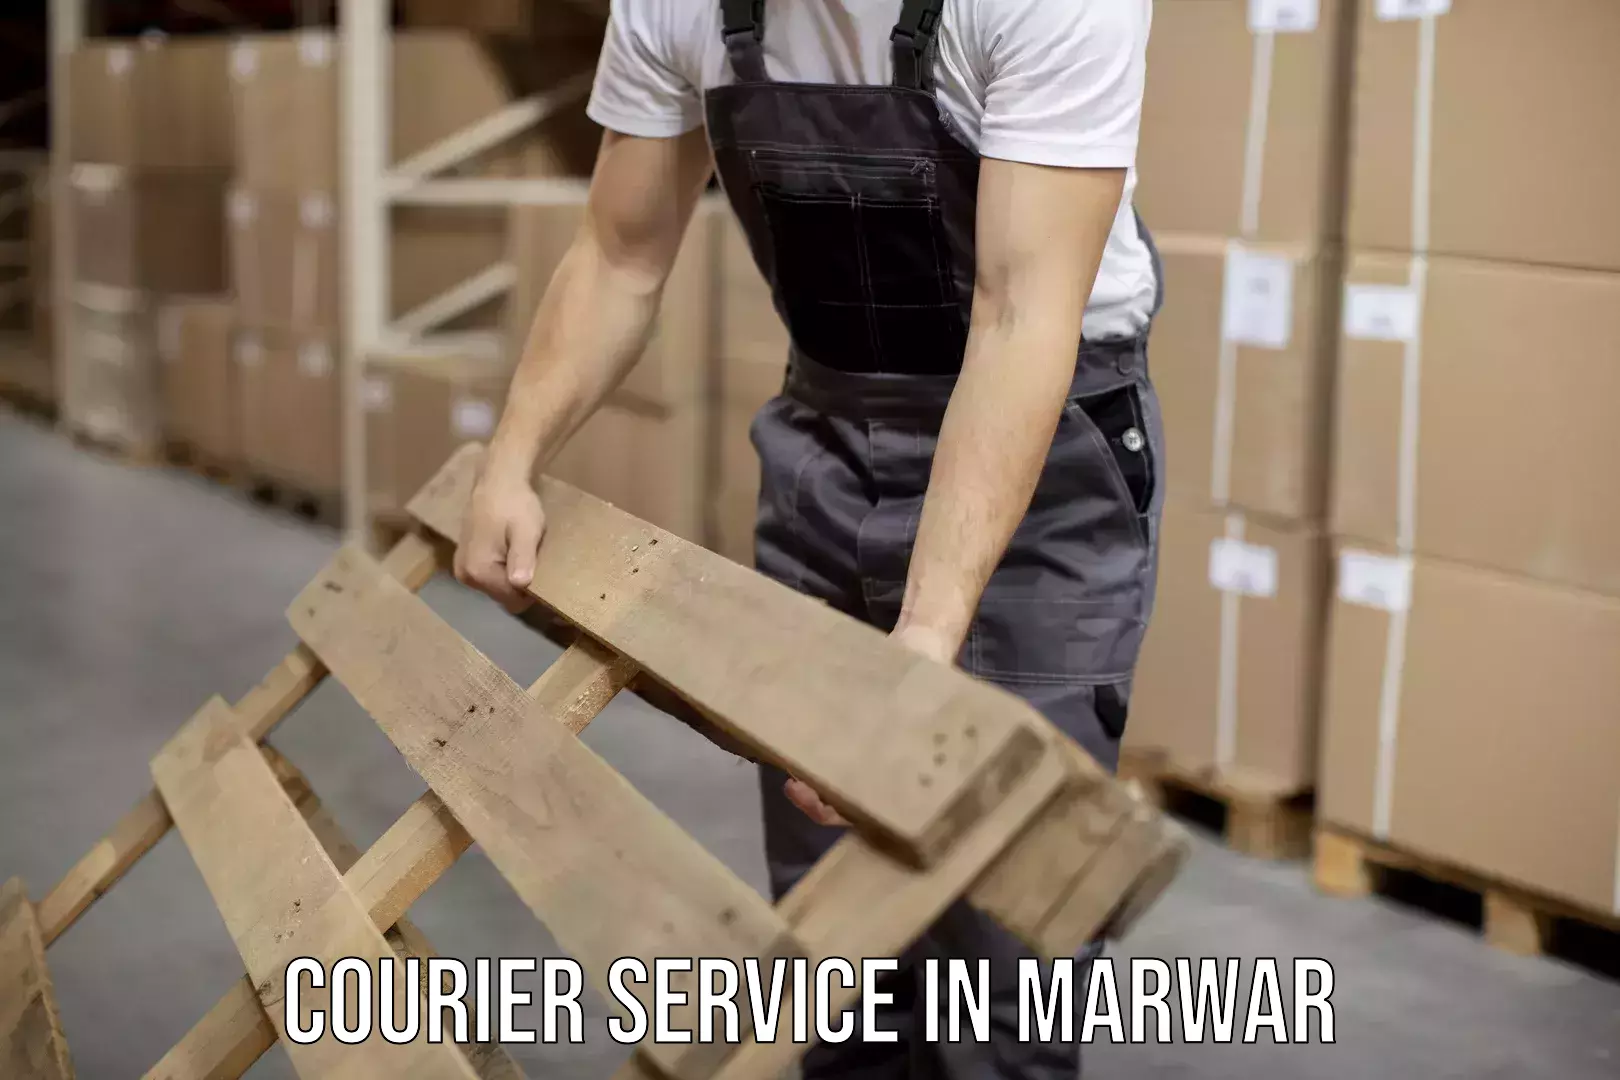 Courier service efficiency in Marwar